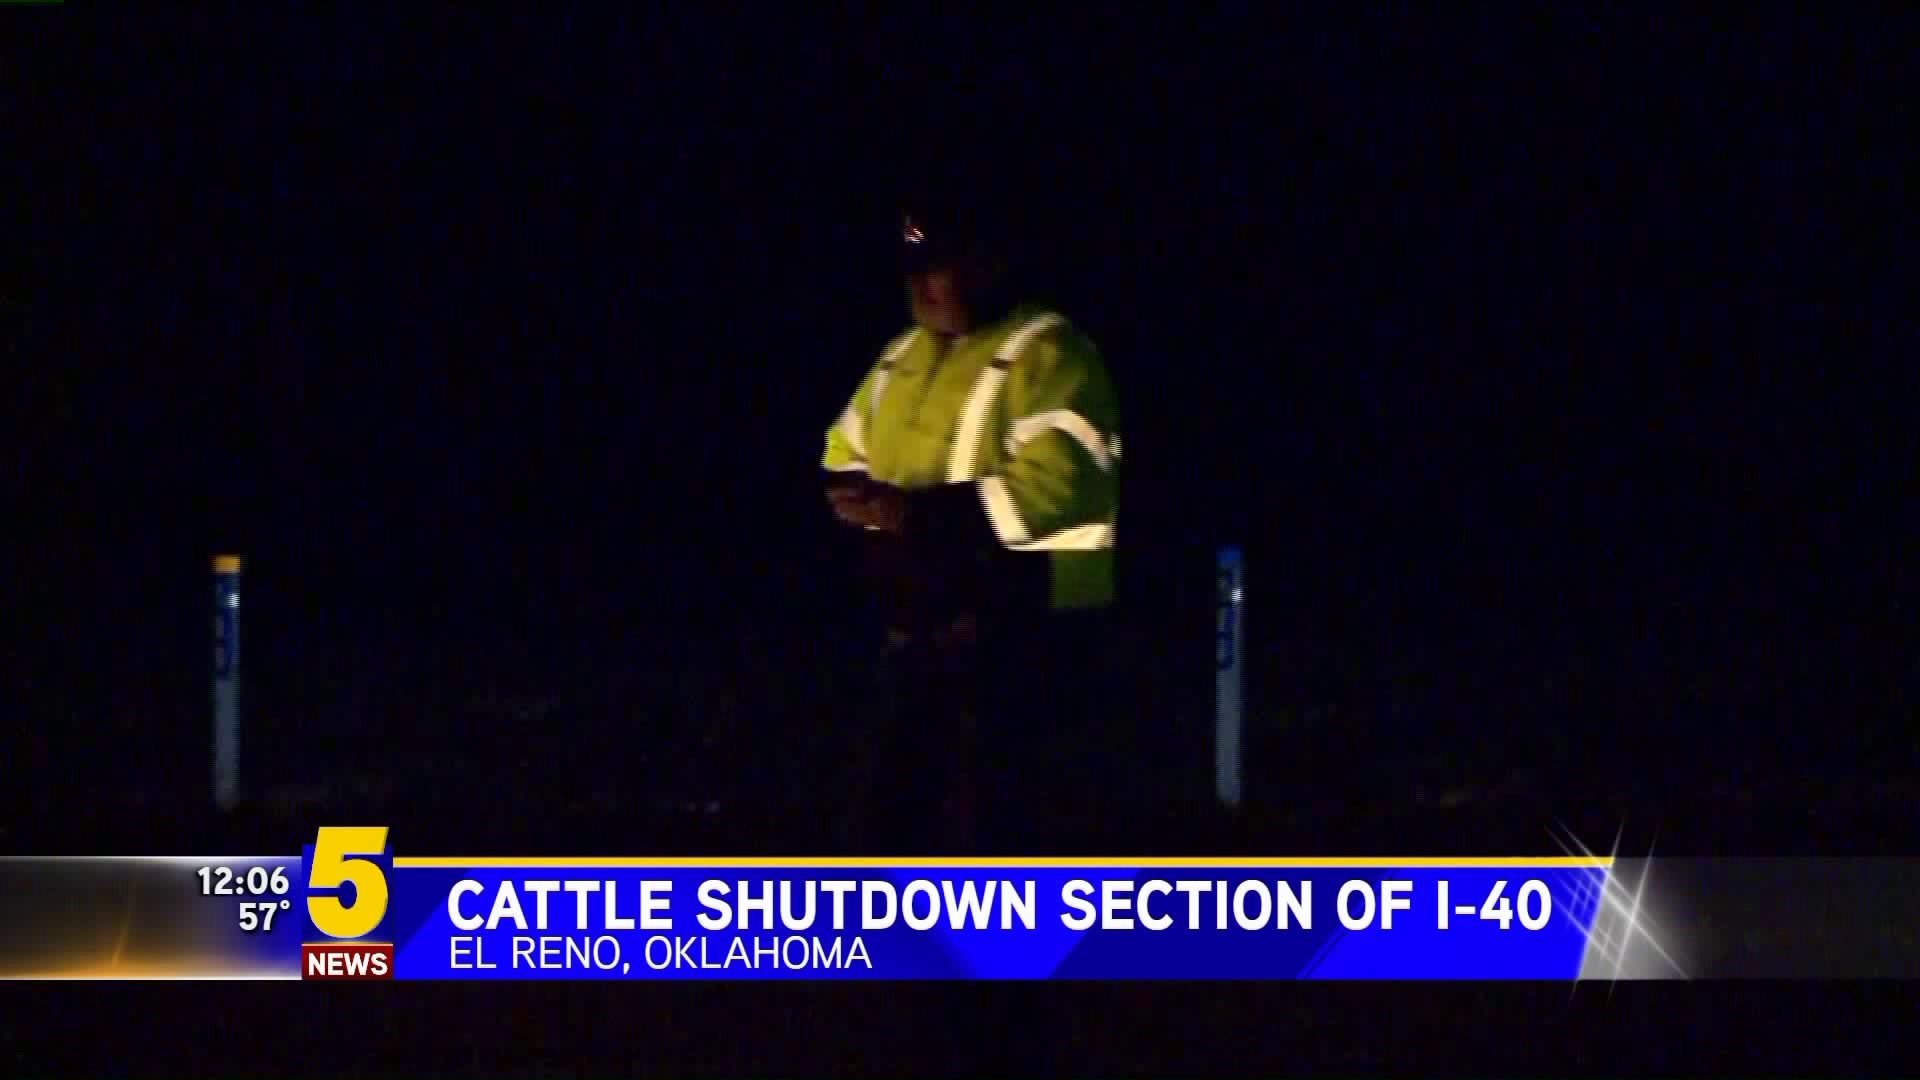 Cattle Shutdown Section of I-40 in Oklahoma